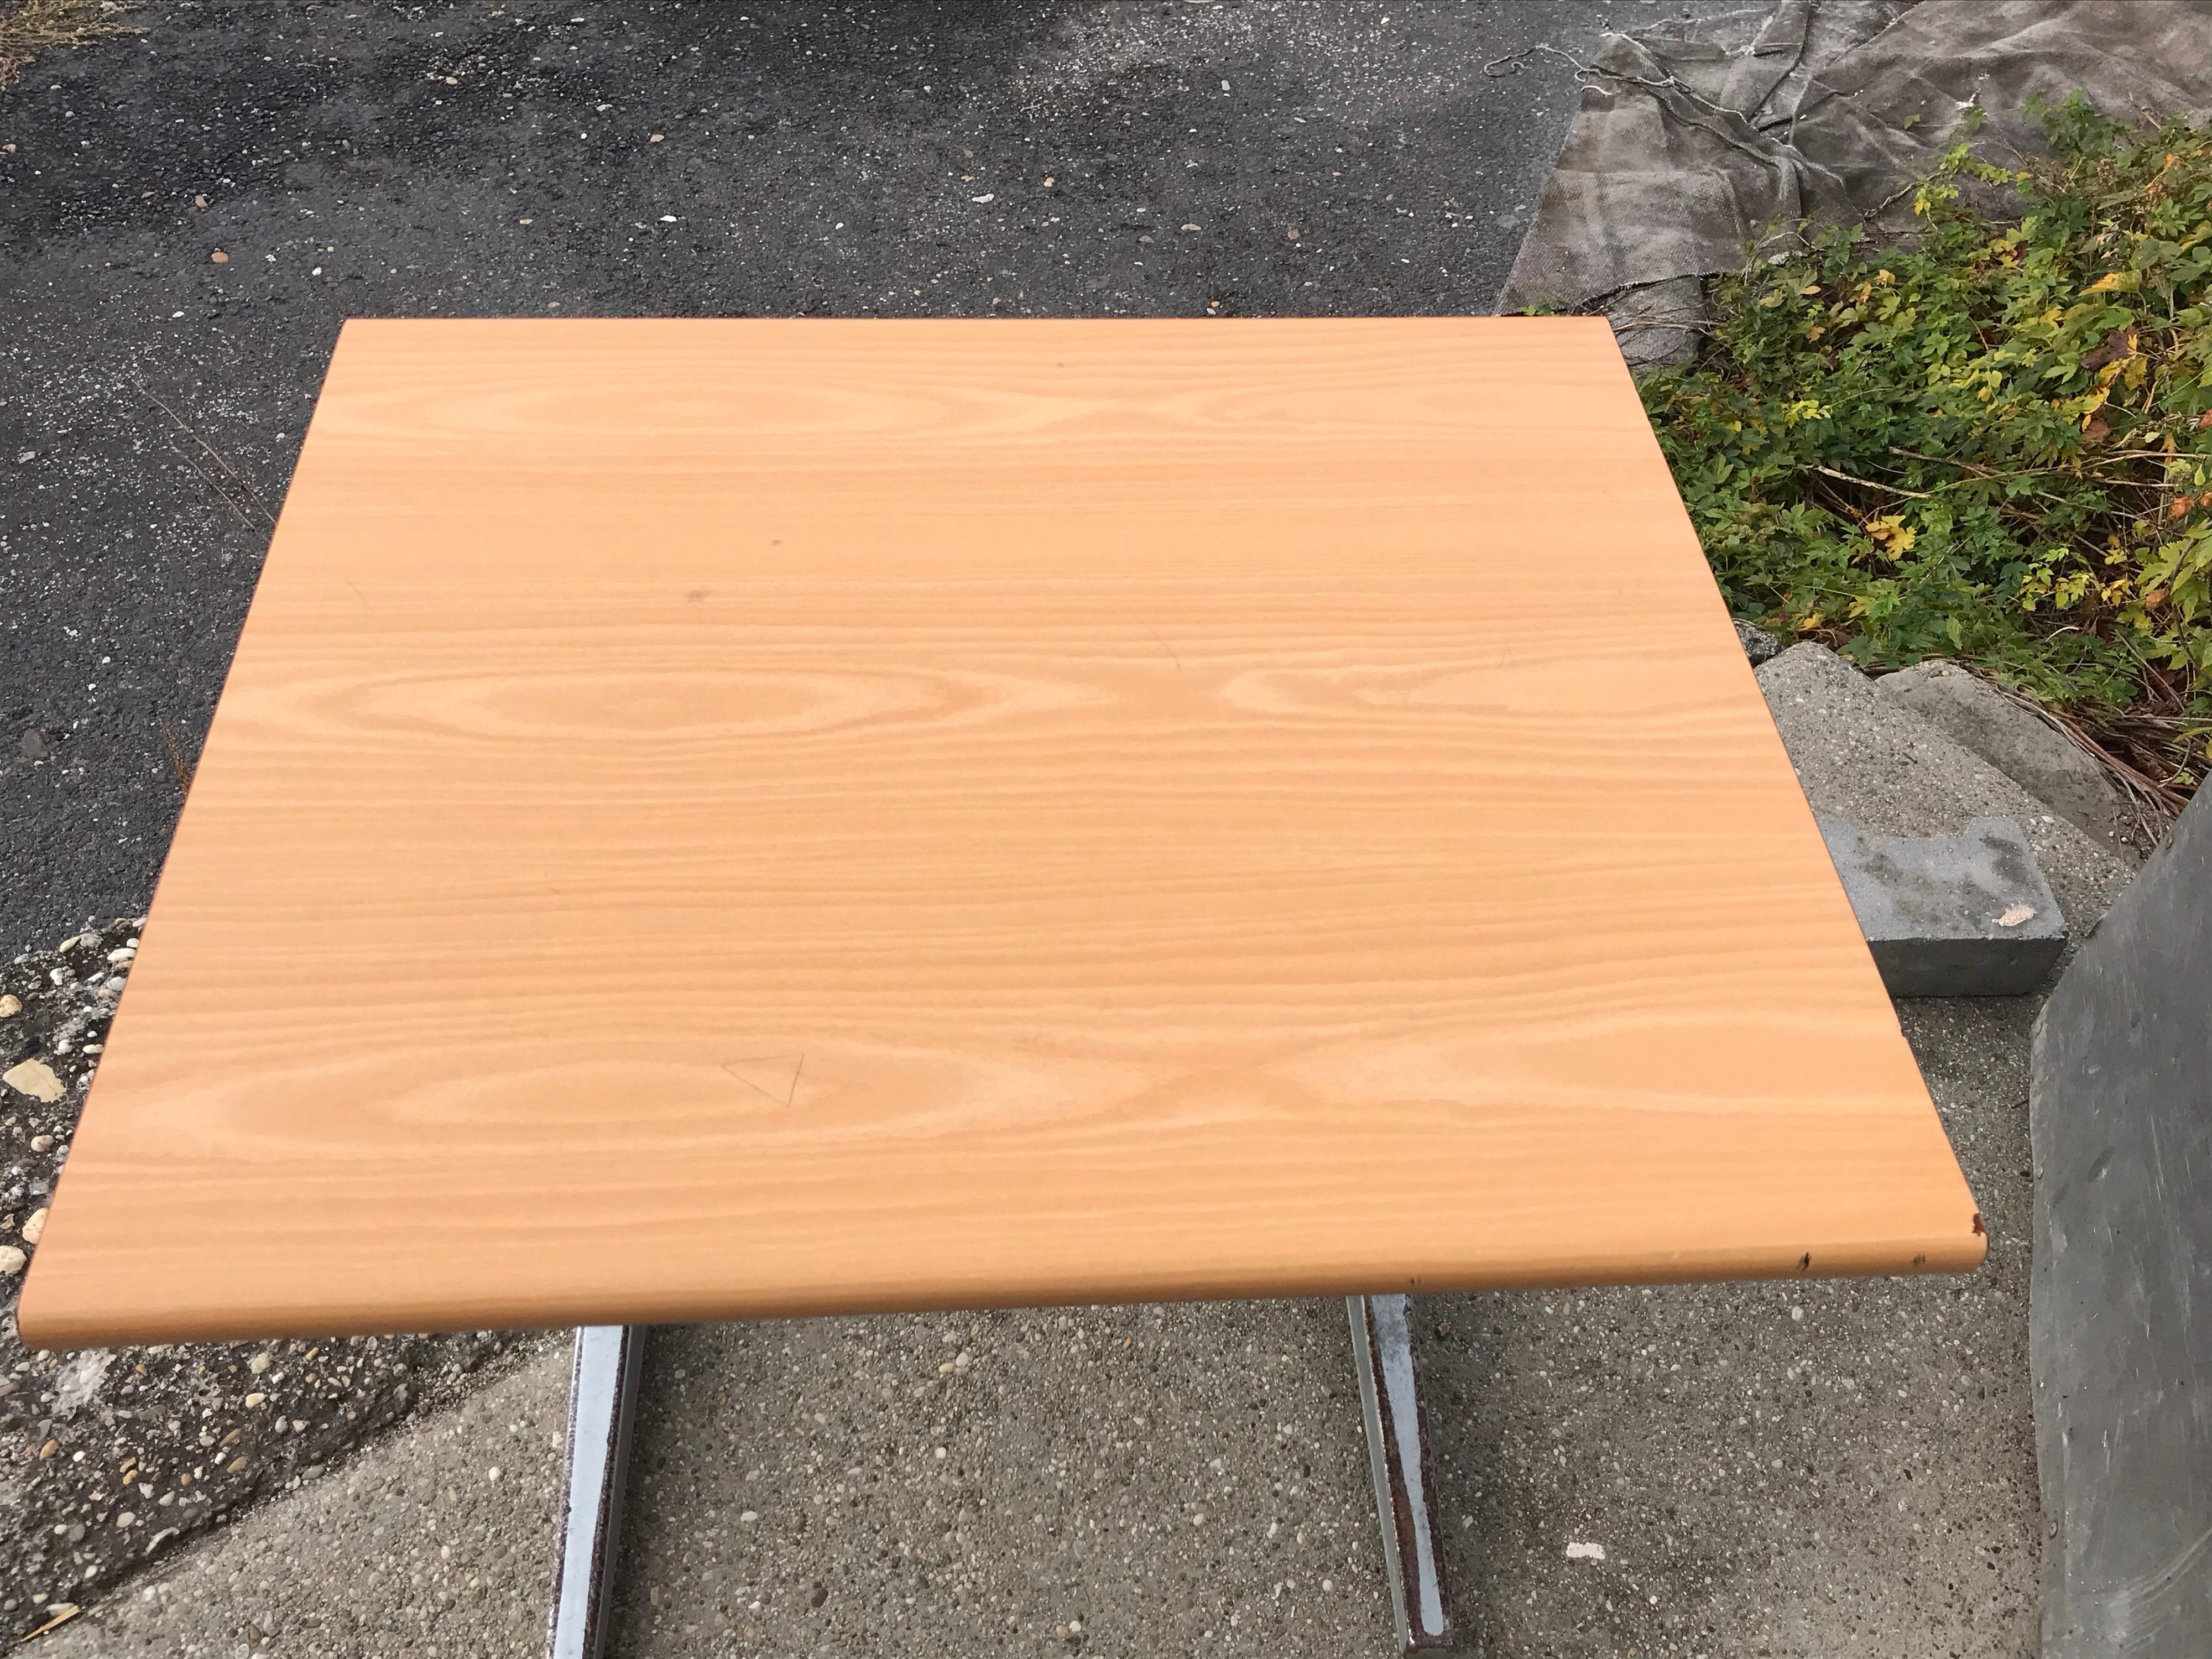 Steel Embru Original 1960s Swiss Made School Bench, Desk, Office Table For Sale